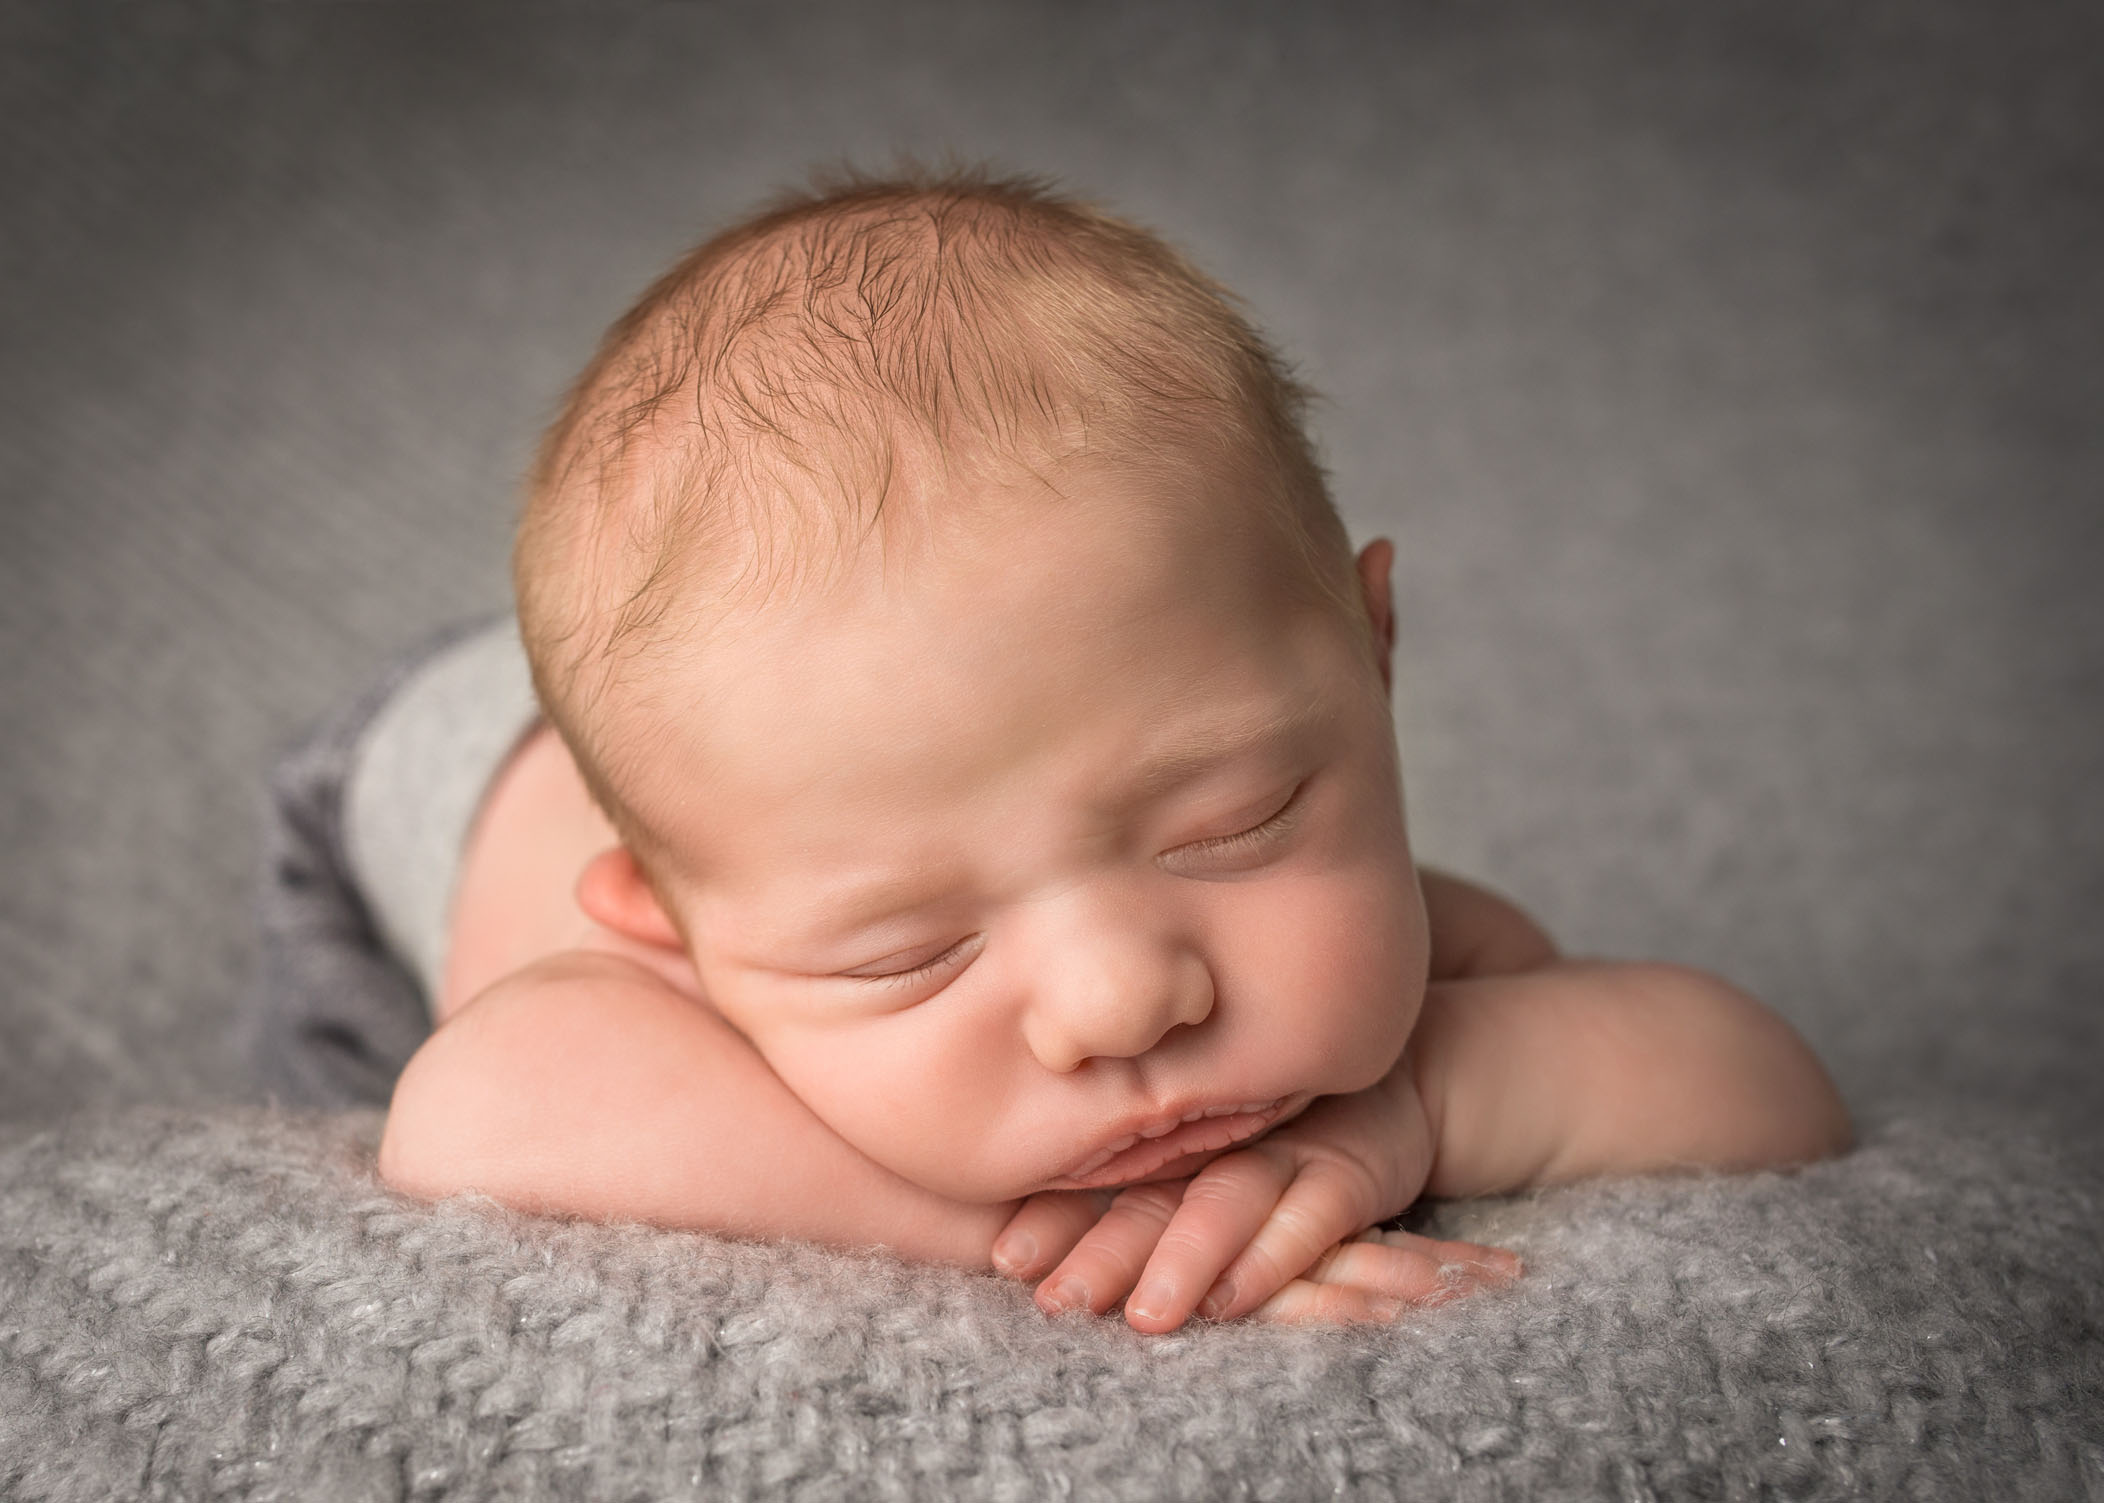 newborn baby boy asleep with head resting on his hands